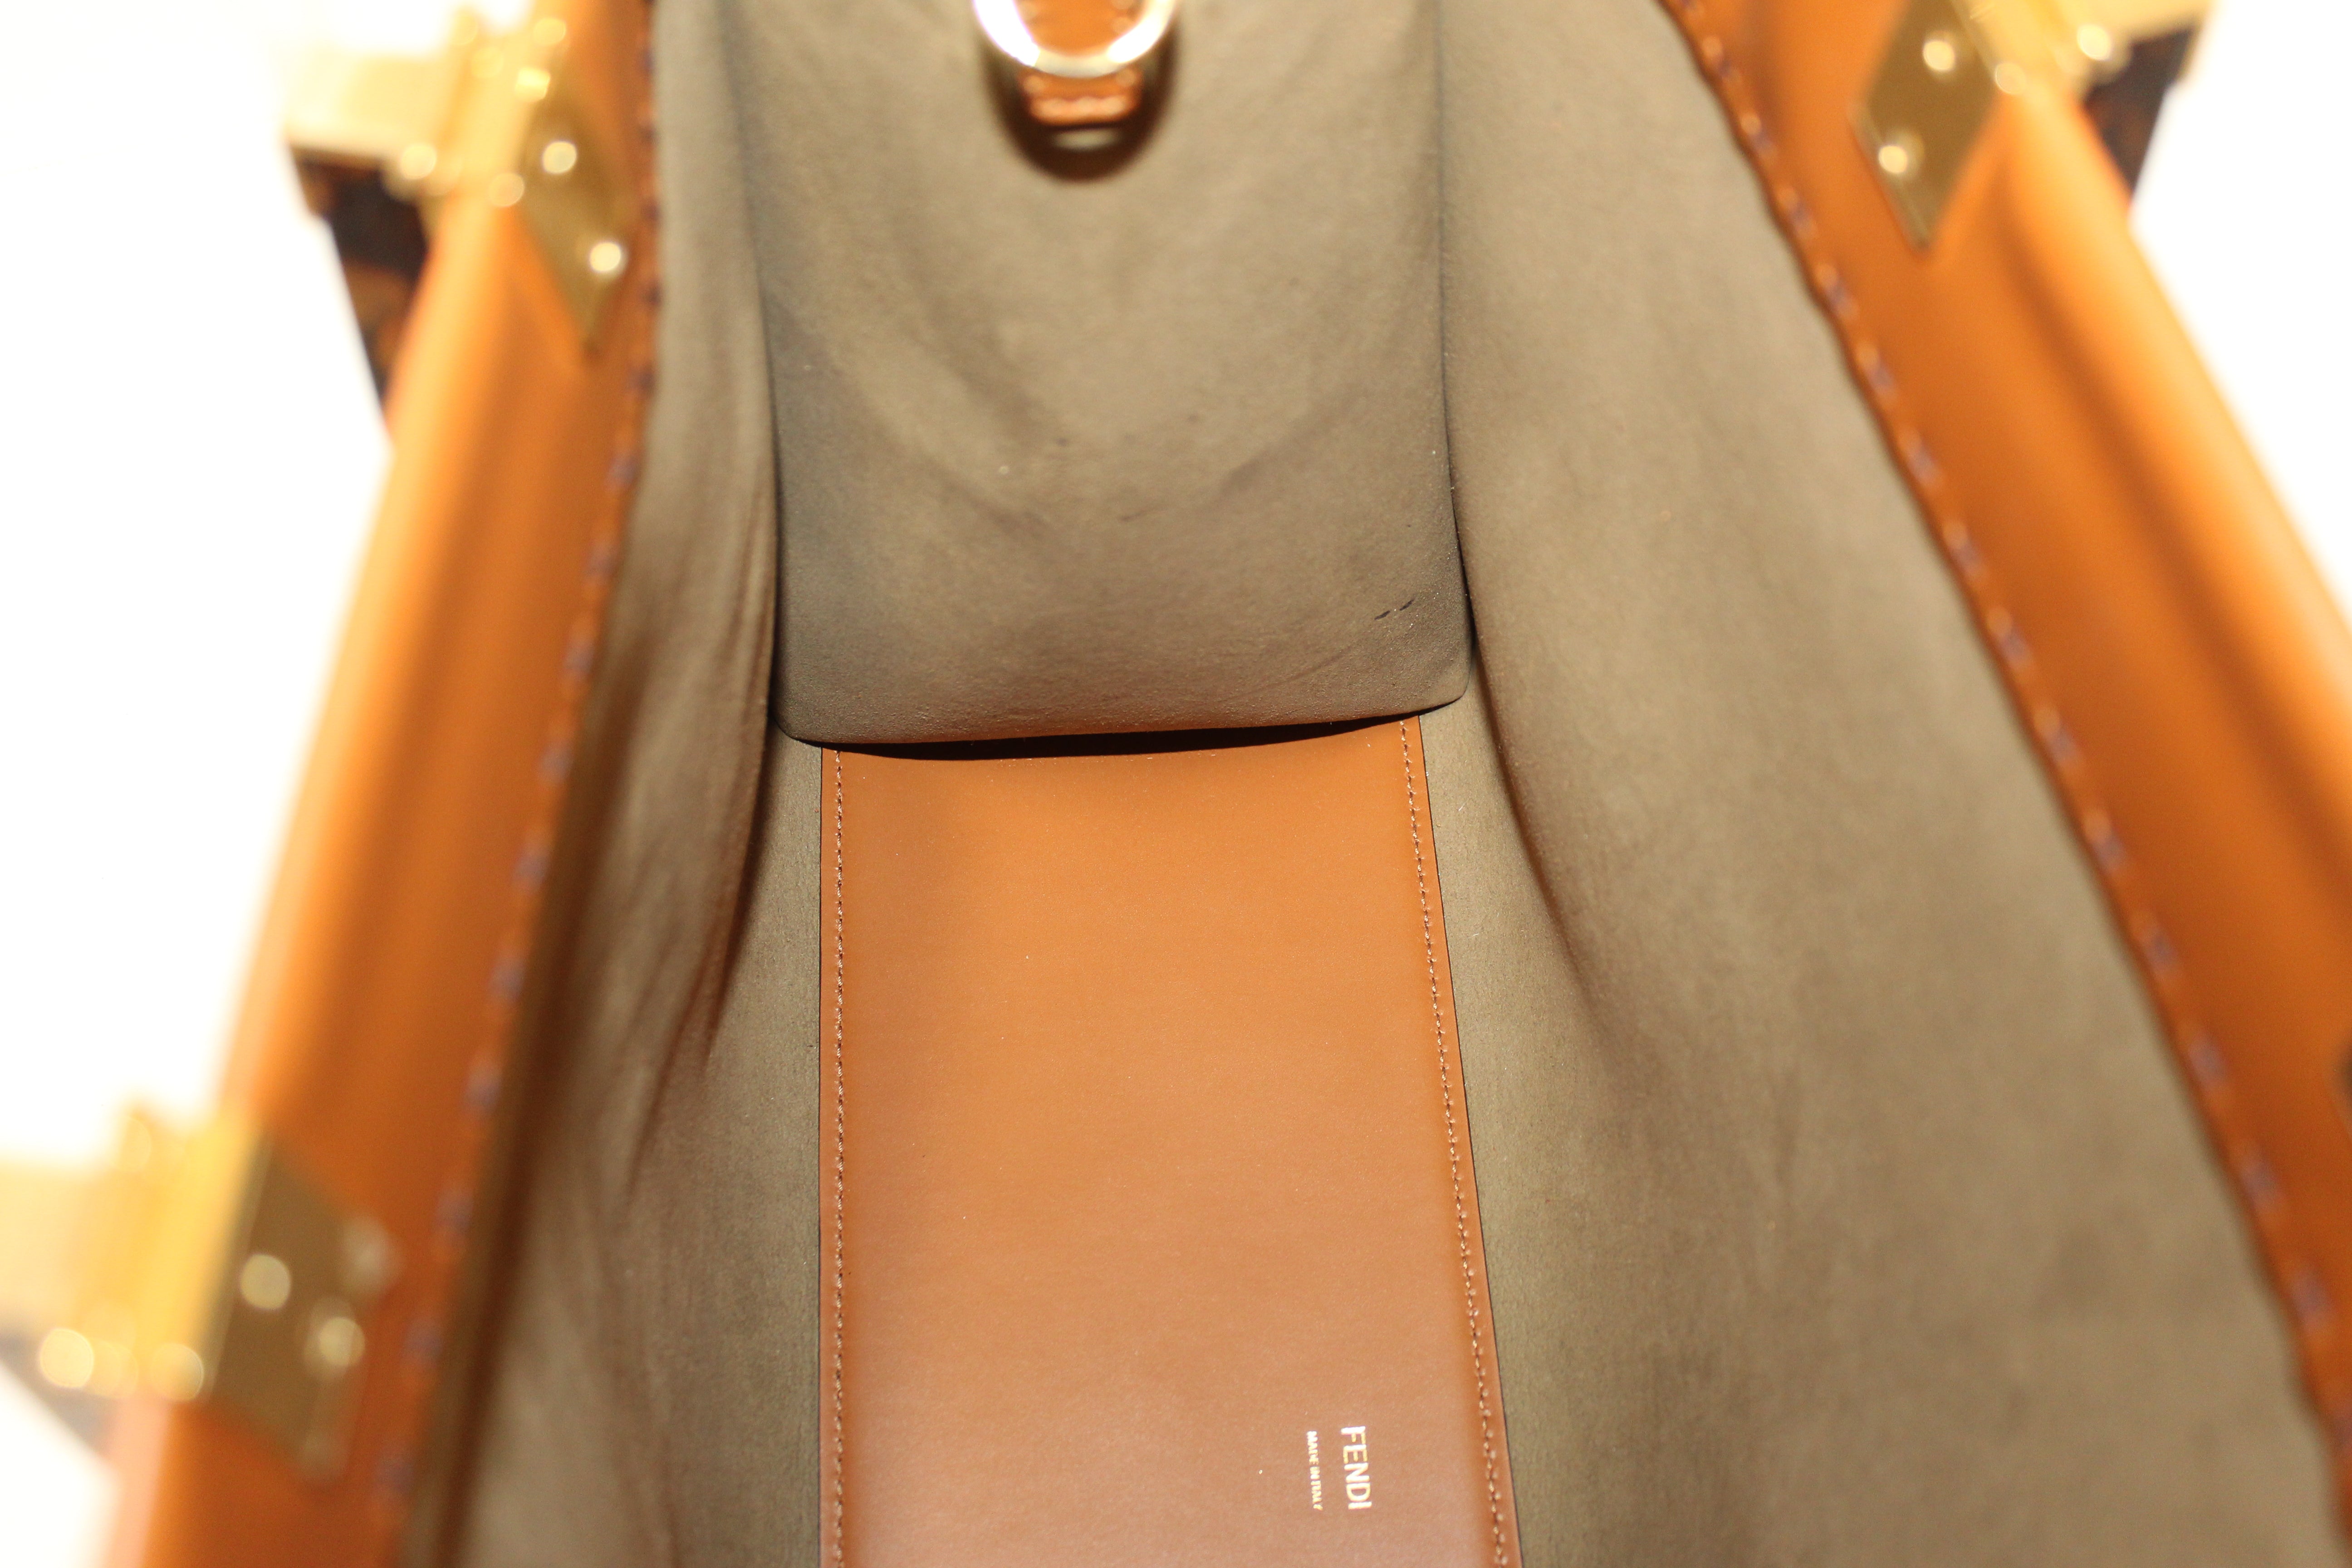 Authentic Fendi Brown Calfskin Leather Roma Sunshine Medium Tote Bag